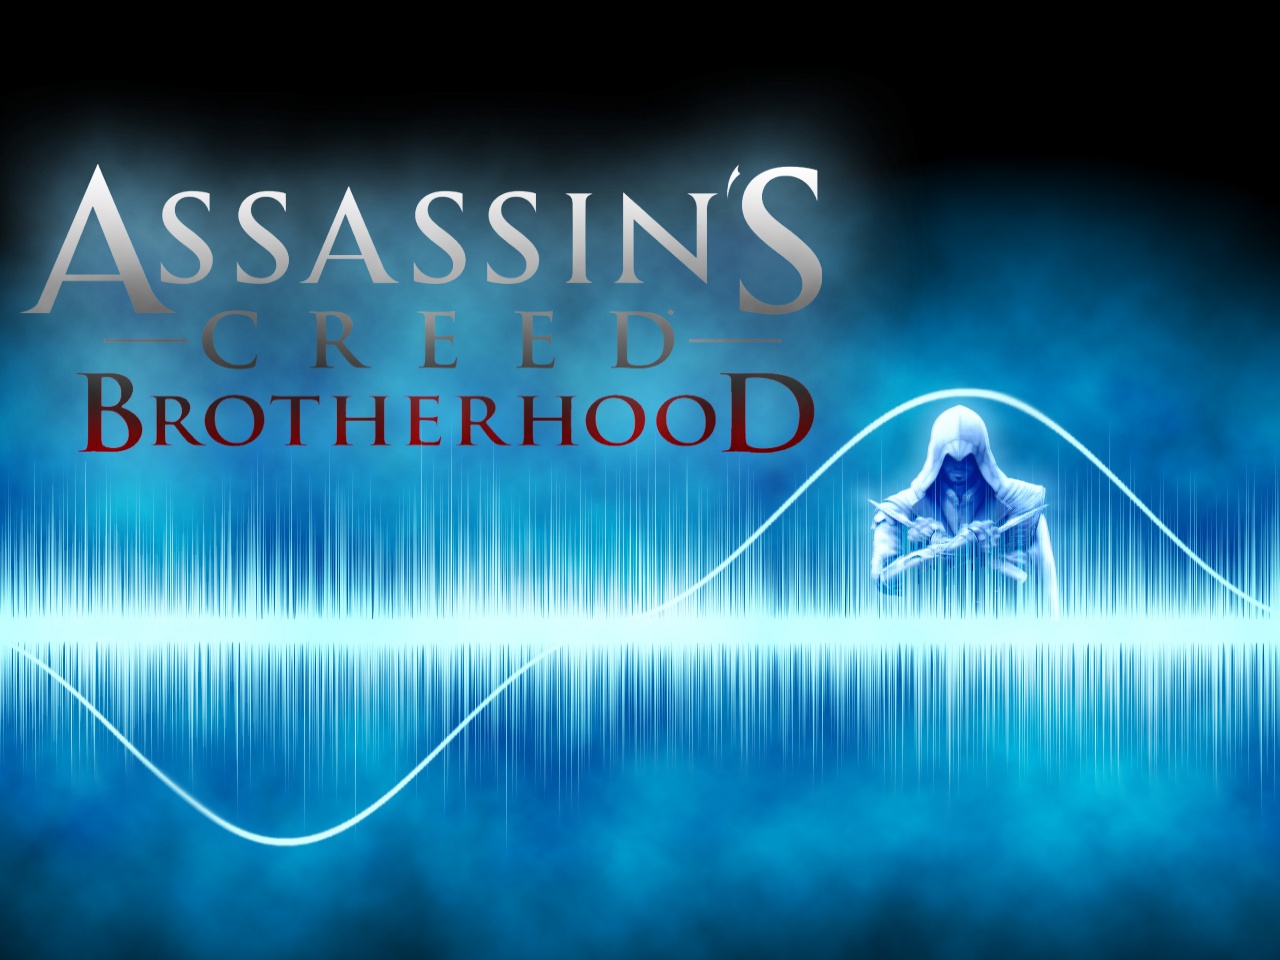 Assassin's Creed Brotherhood - The Assassin's Wallpaper (31743354 ...